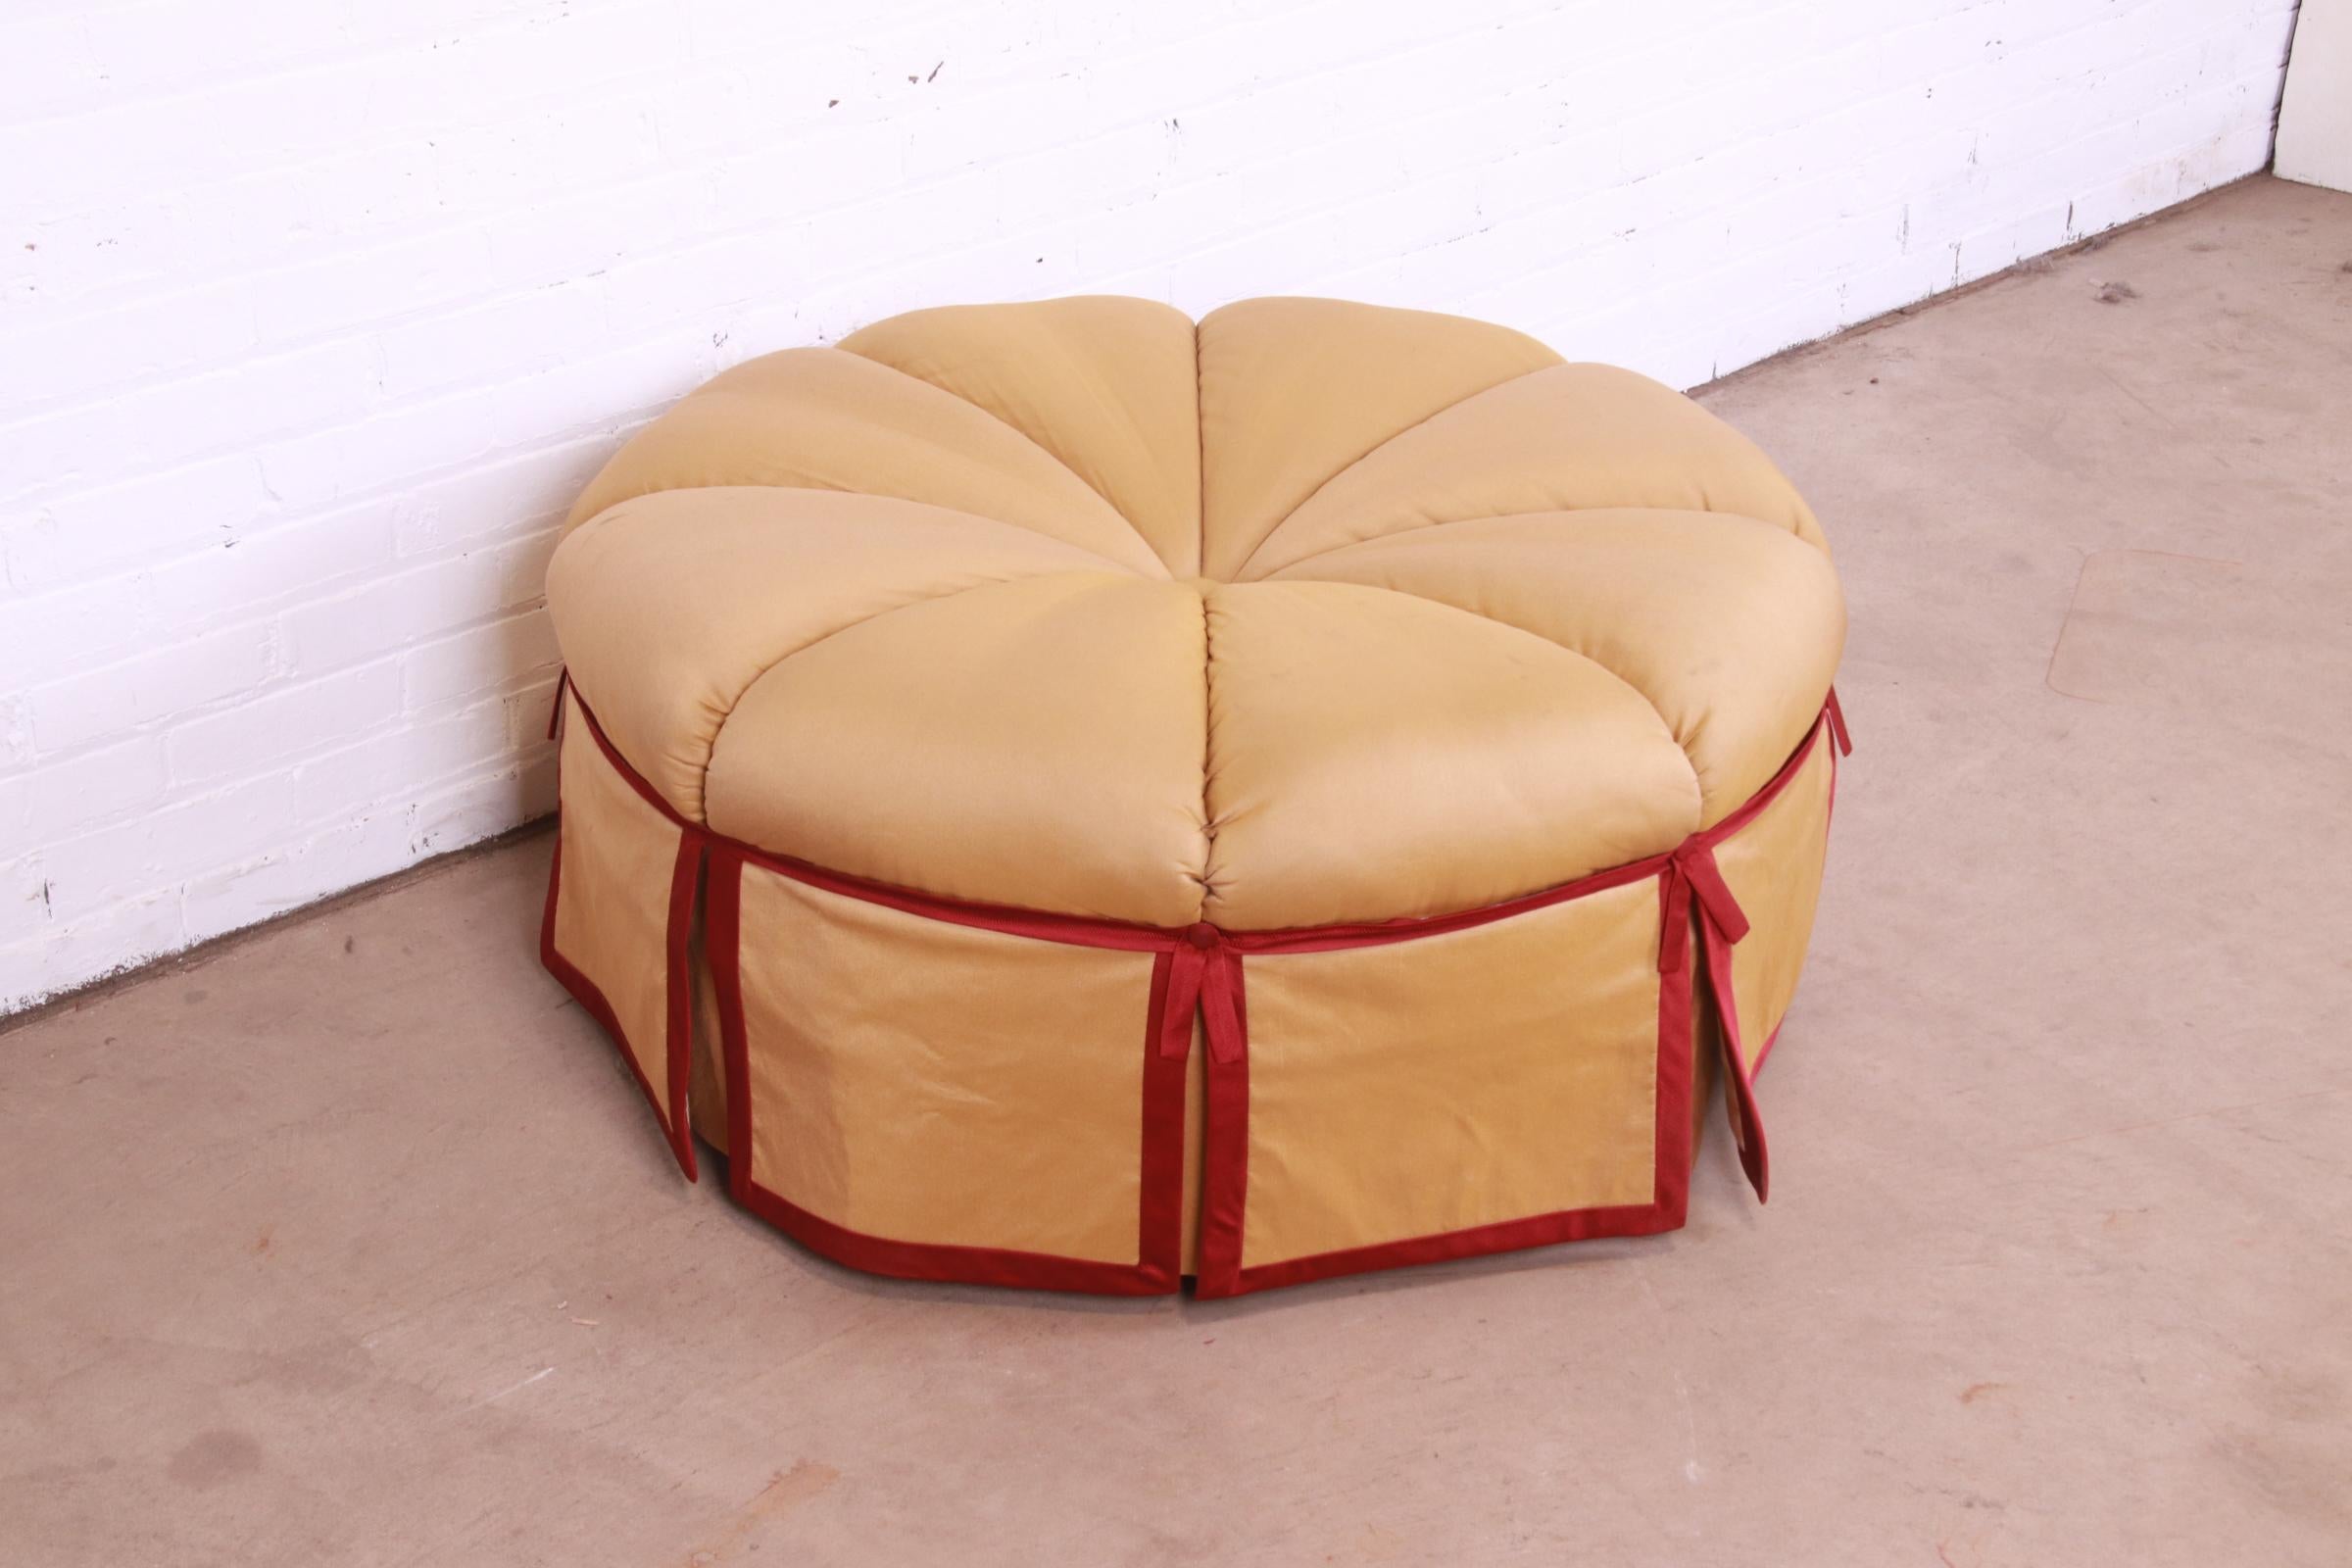 Upholstery Baker Furniture Hollywood Regency Tufted Upholstered Large Round Ottoman